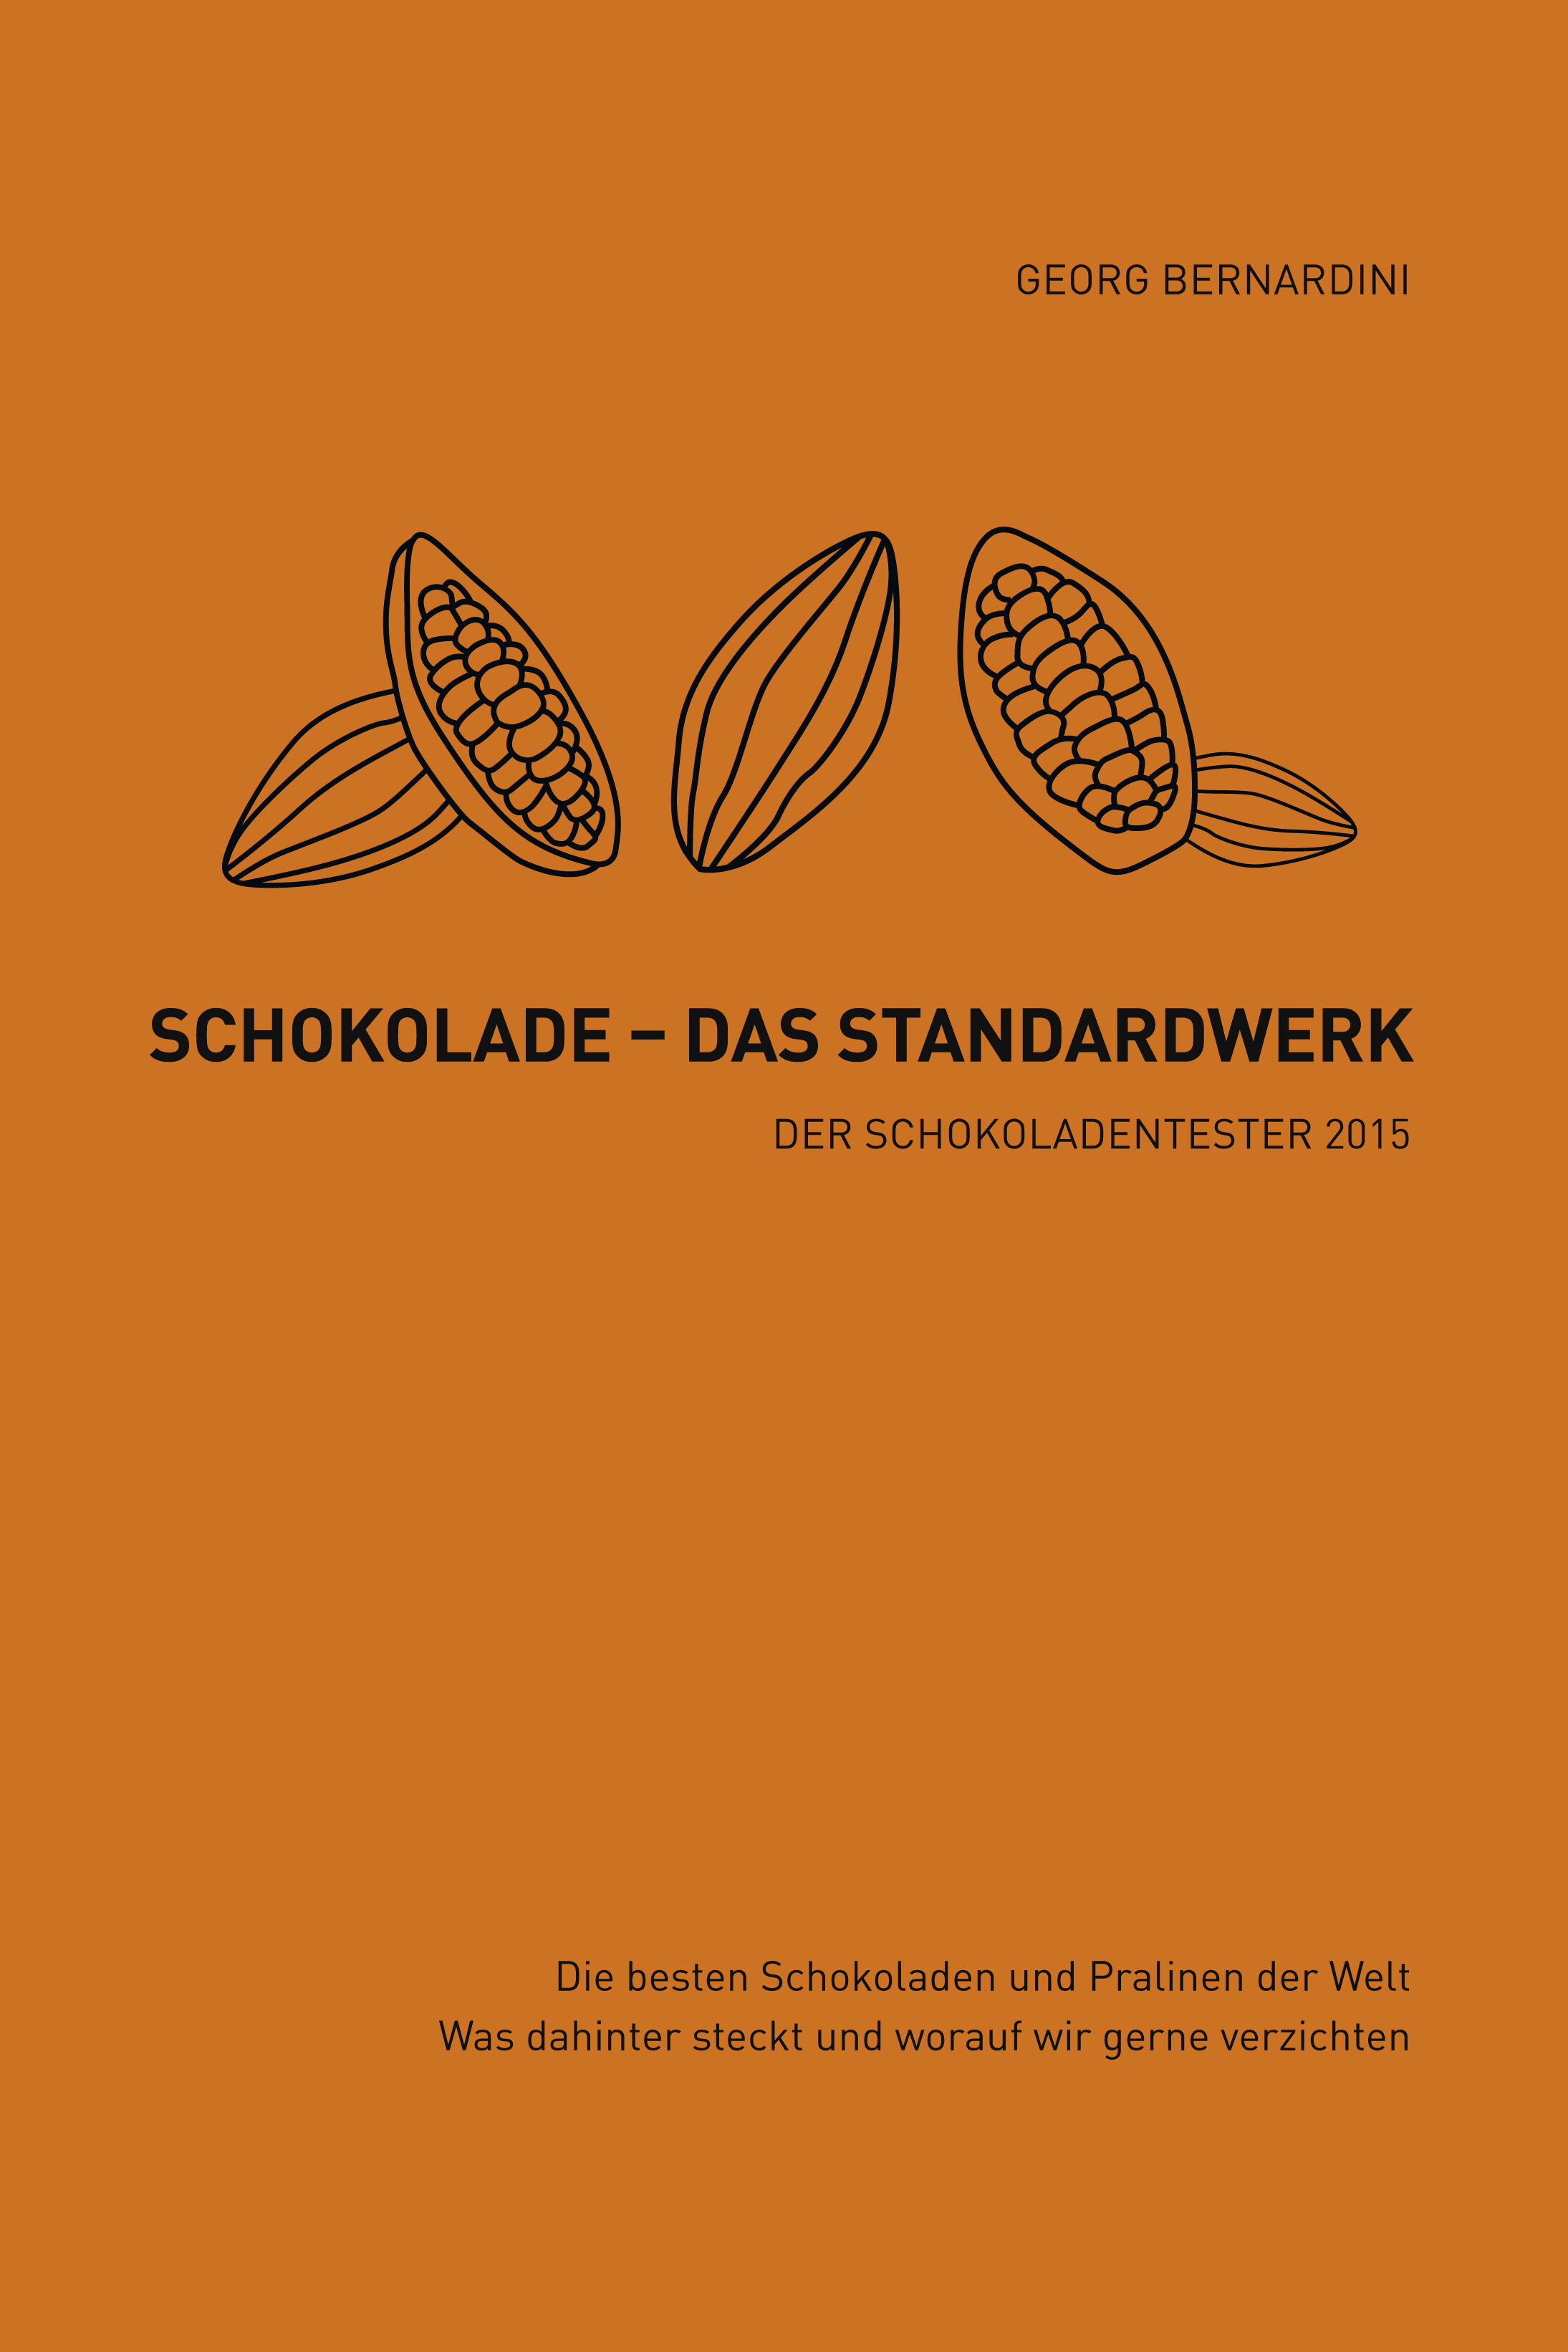 schokolade – das standardwerk georg bernardini sachkundebuch kochkultur esskultur